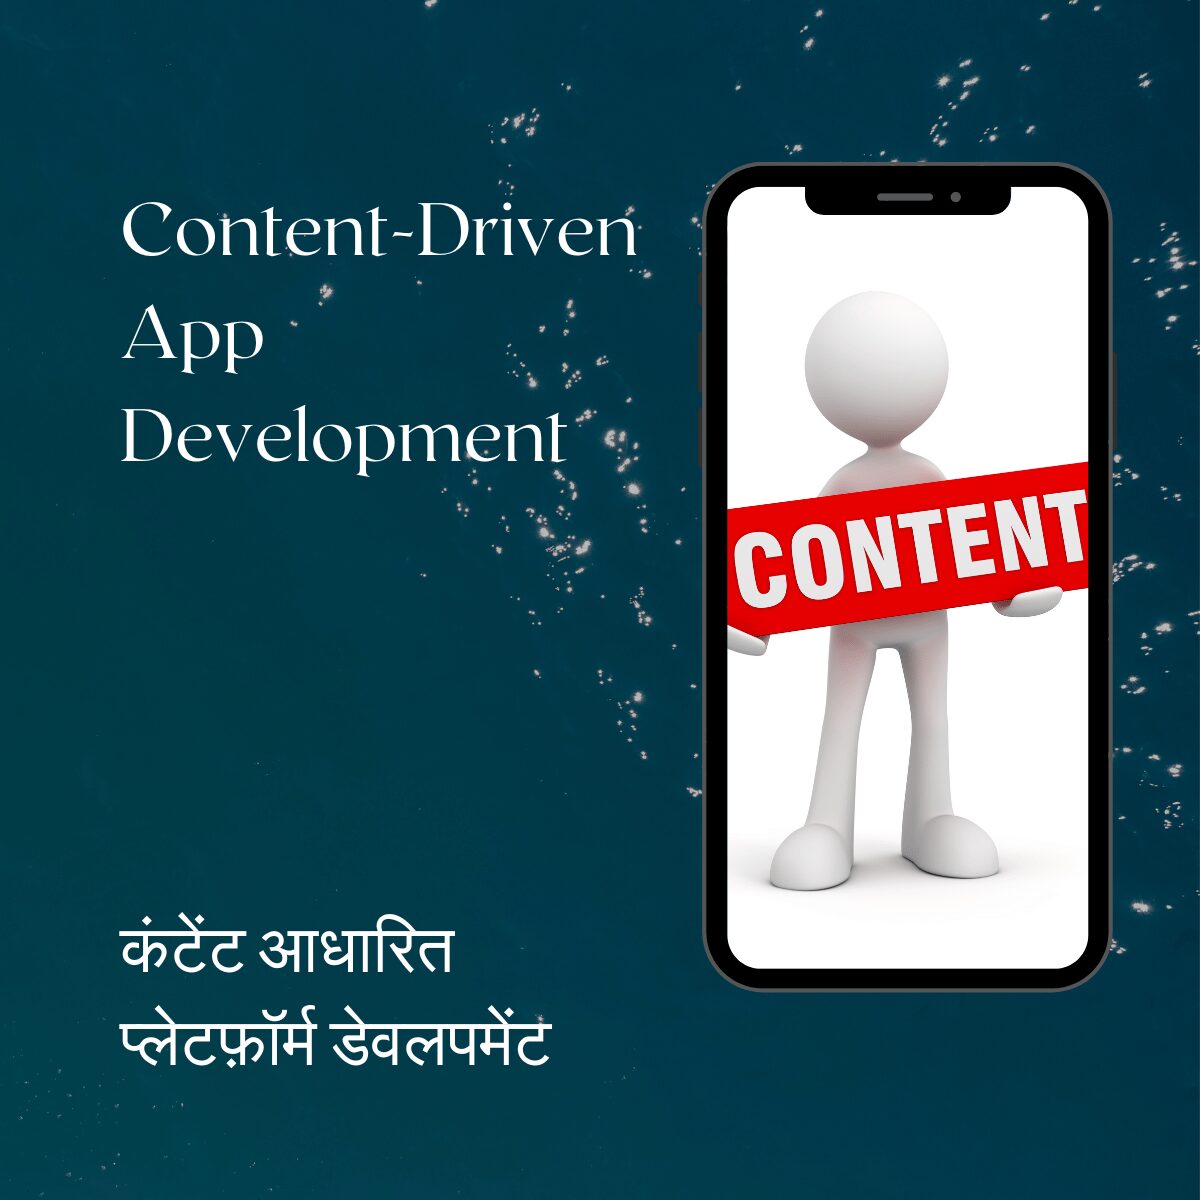 Content-Driven App Development कंटेंट आधारित प्लेटफ़ॉर्म डेवलपमेंट